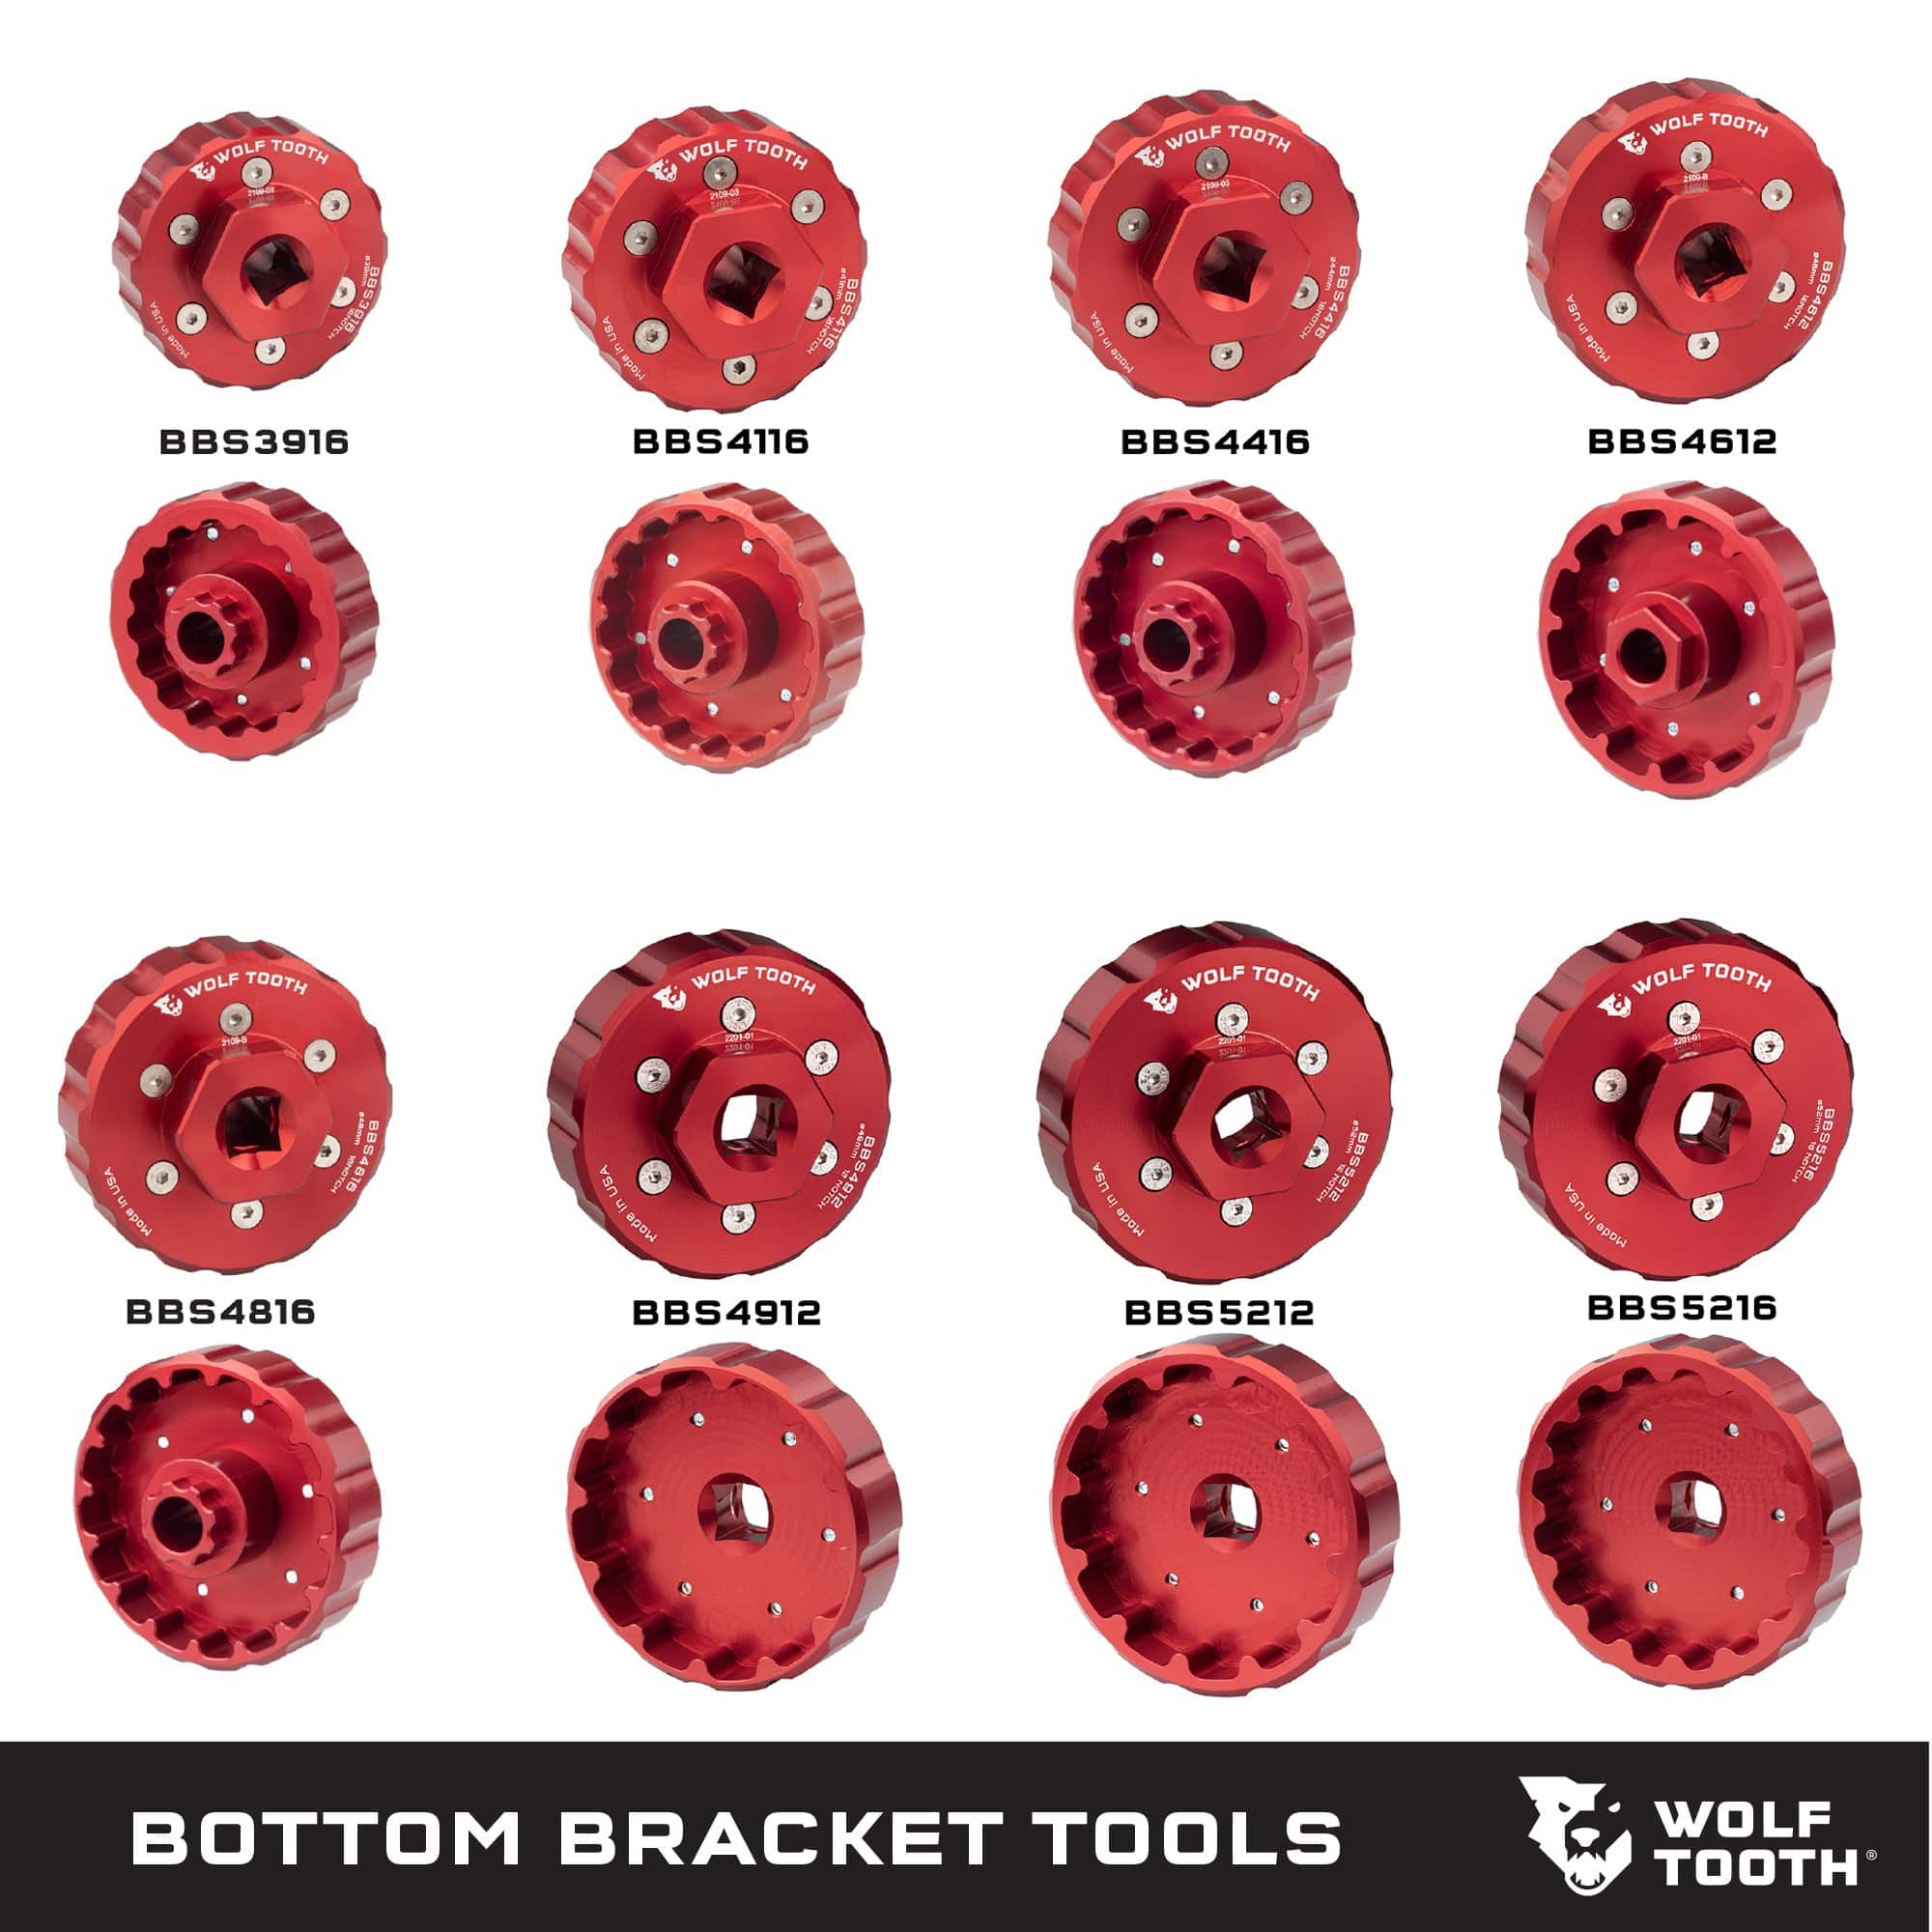 Bottom Bracket Tool Guide (Basic to Advanced)